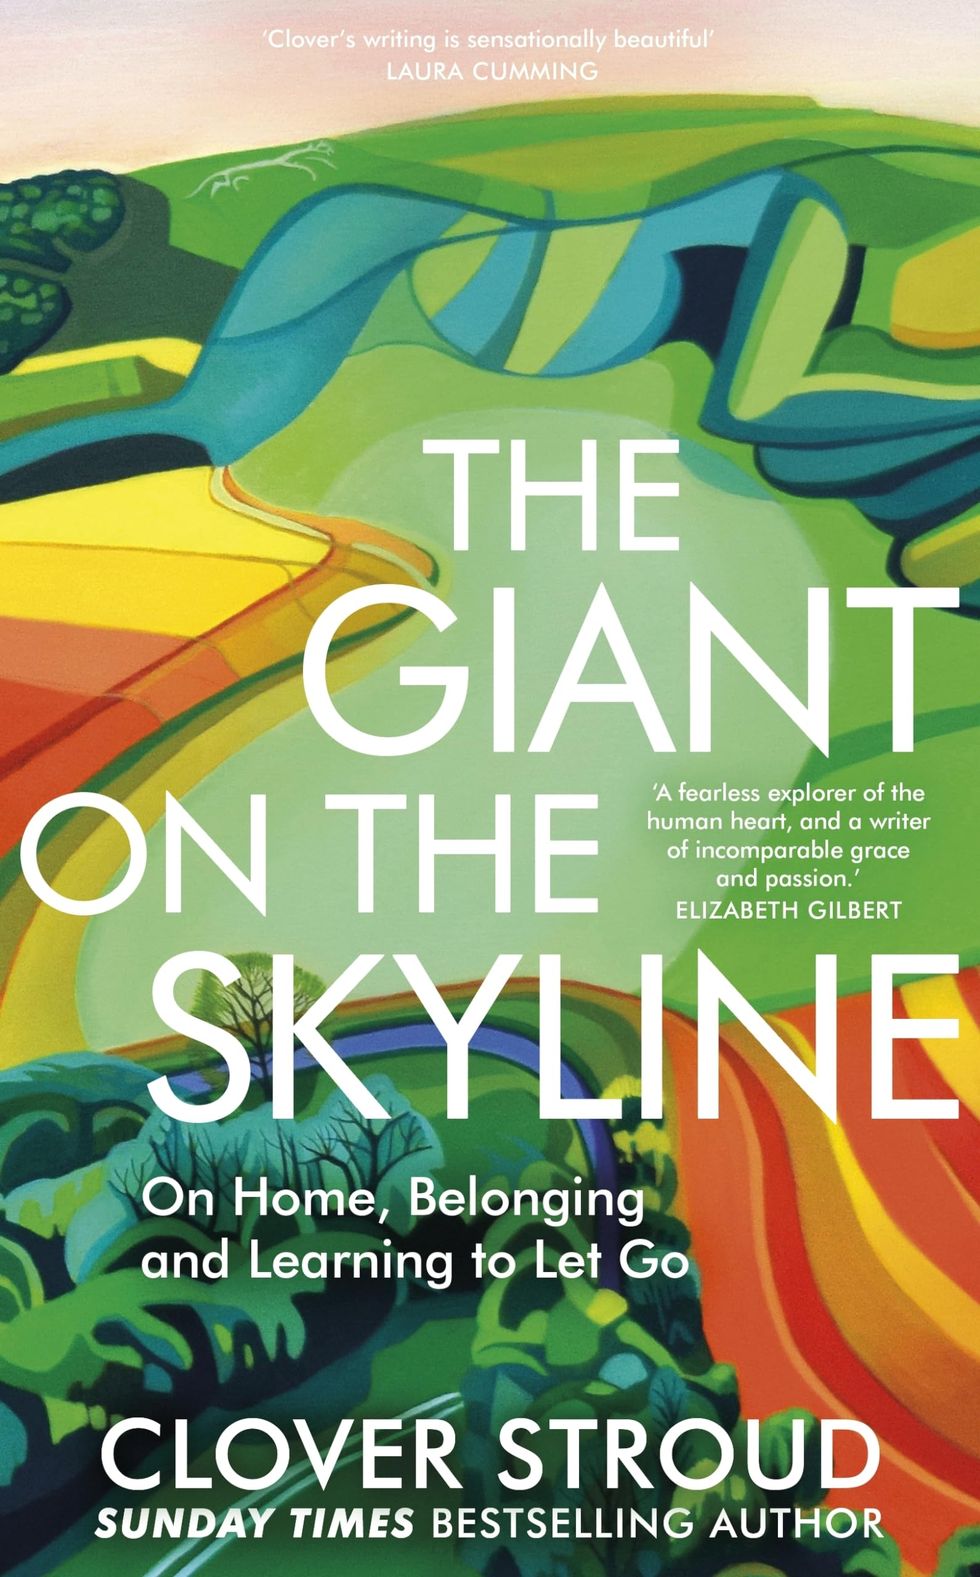 The Giant on the Skyline by Clover Stroud